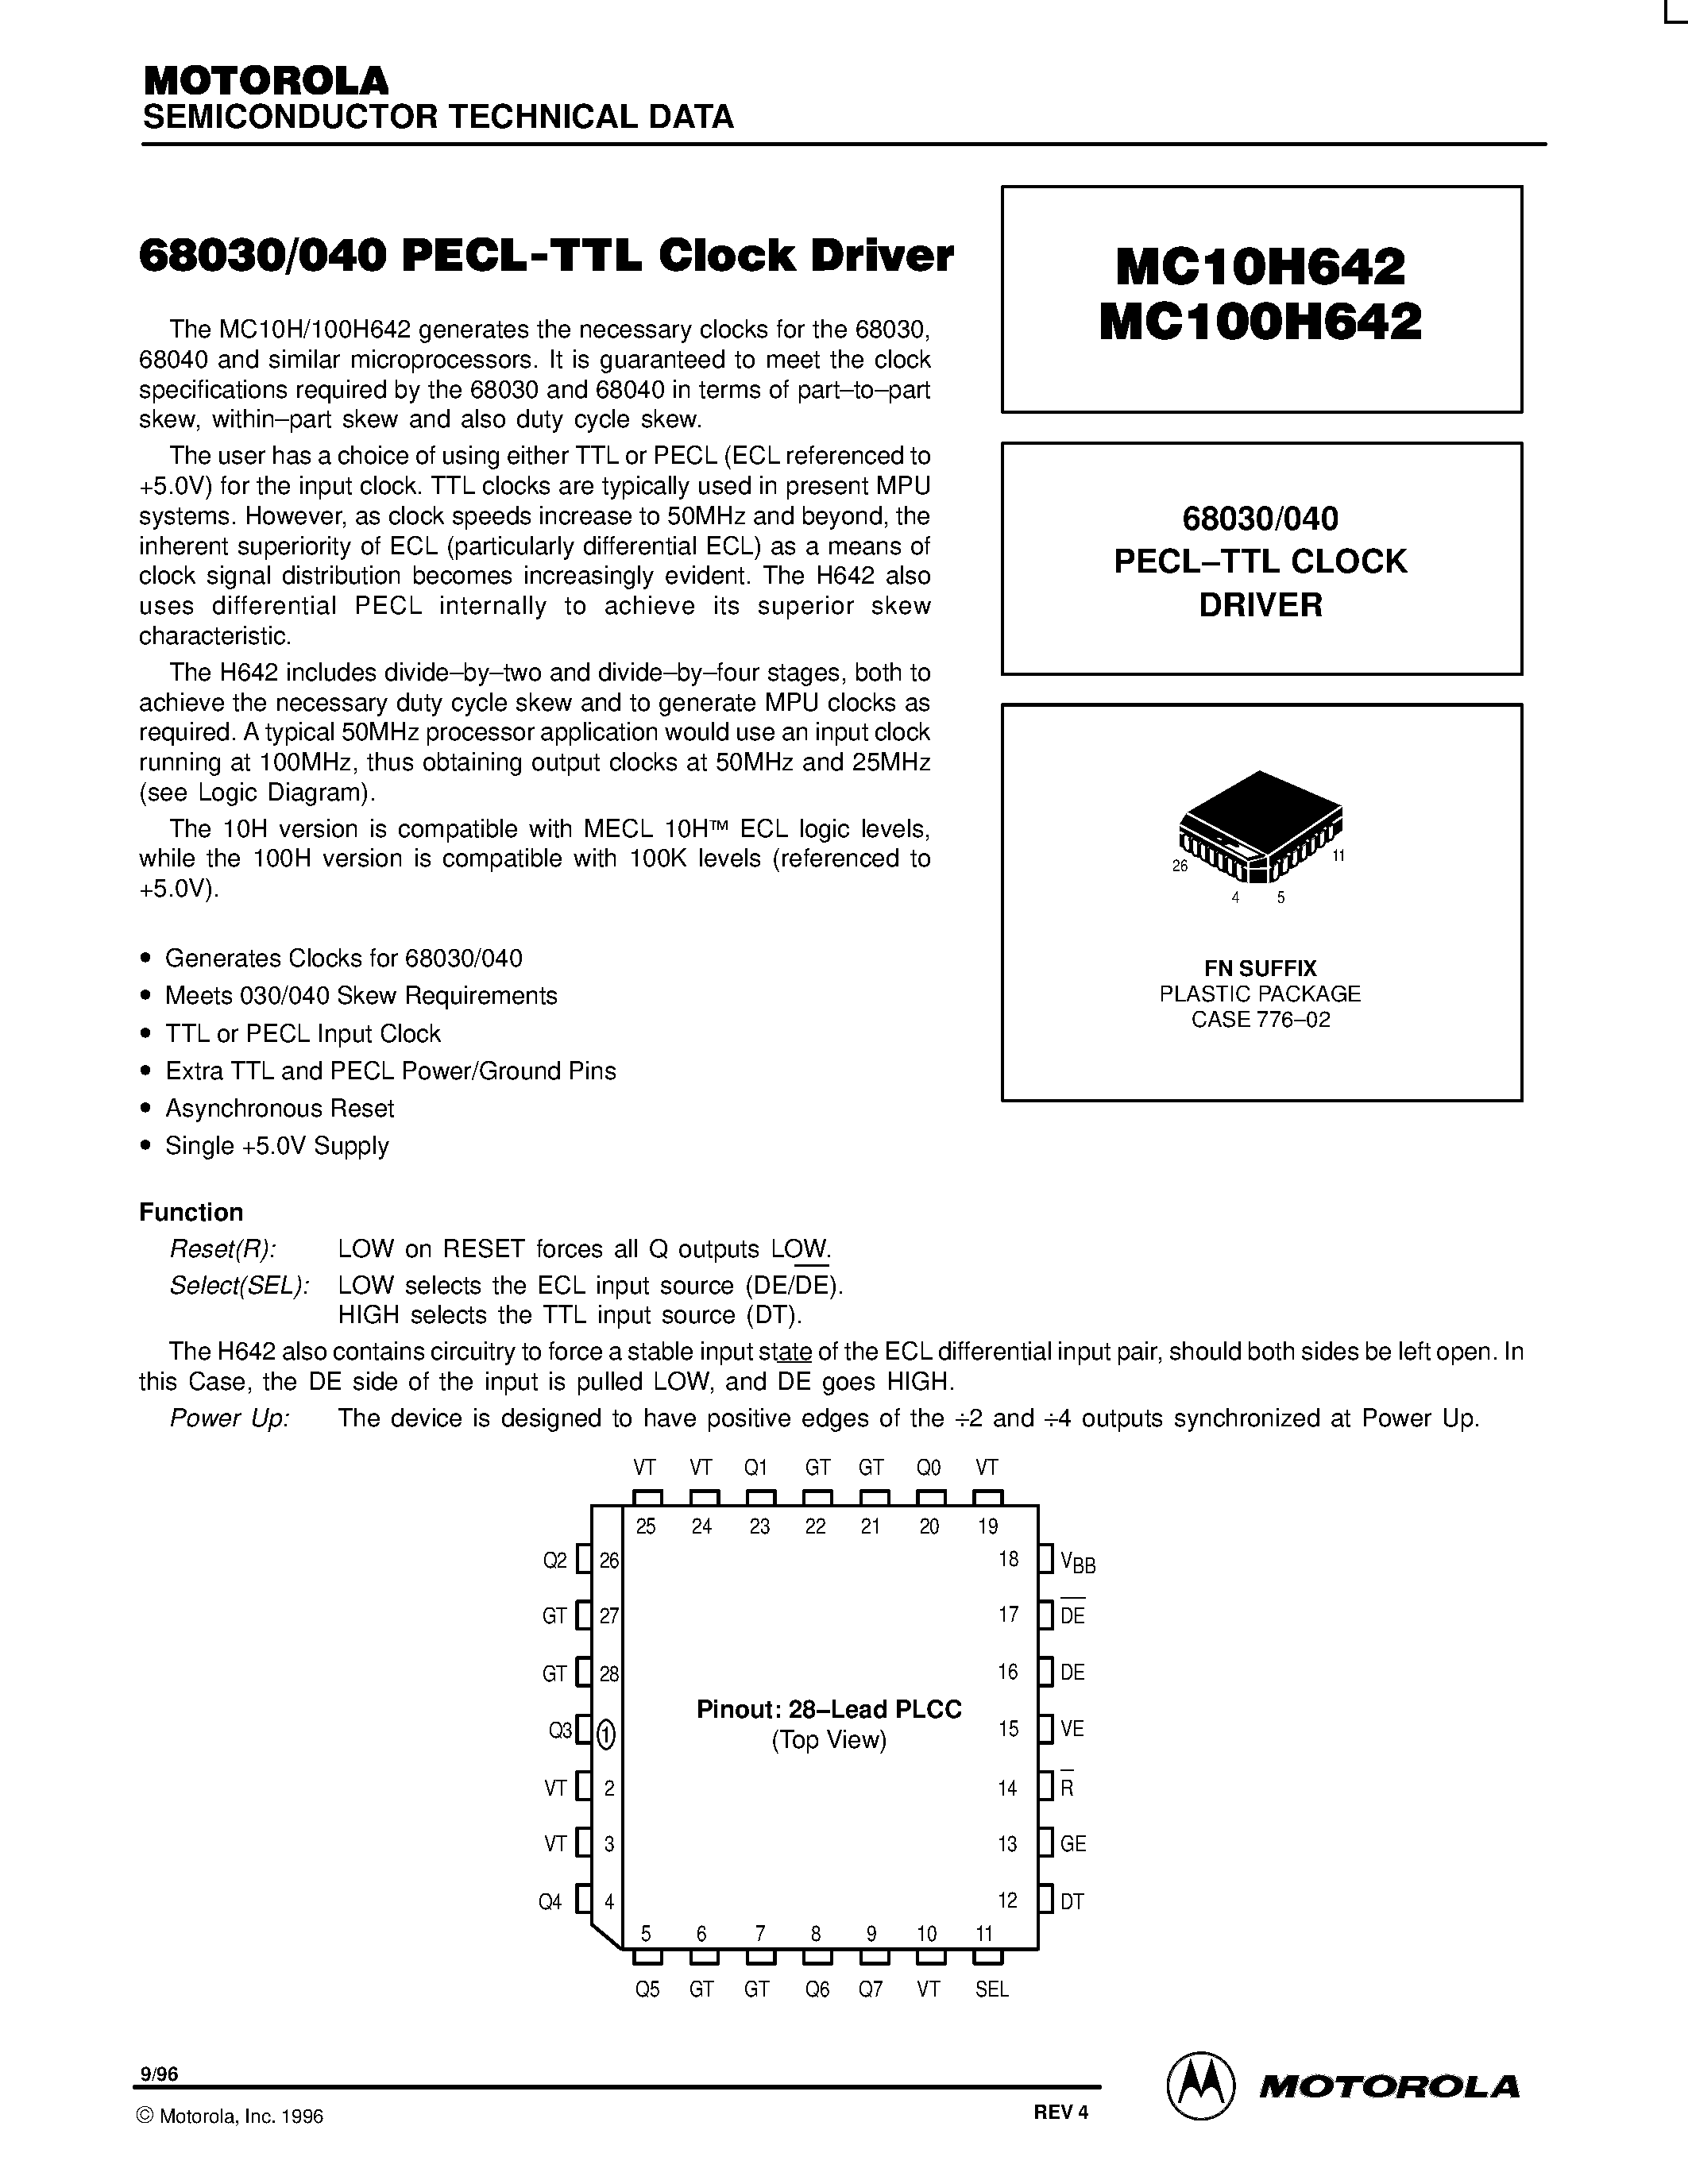 Datasheet MC10H642FN - 68030/040 PECL-TTL CLOCK DRIVER page 1